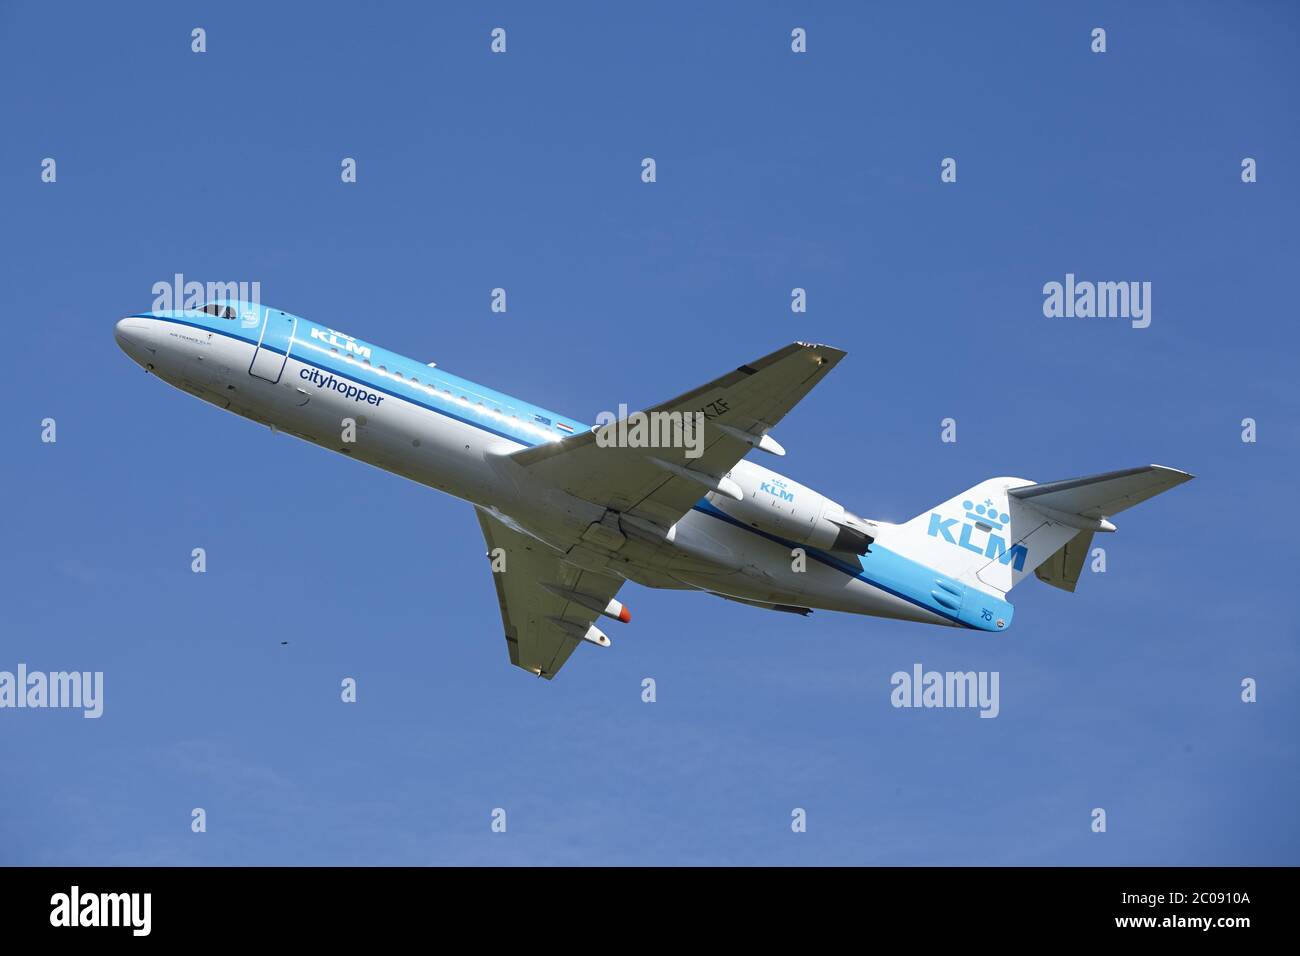 Flughafen Amsterdam Schiphol - Fokker 70 von KLM Take-off Set Foto Stock